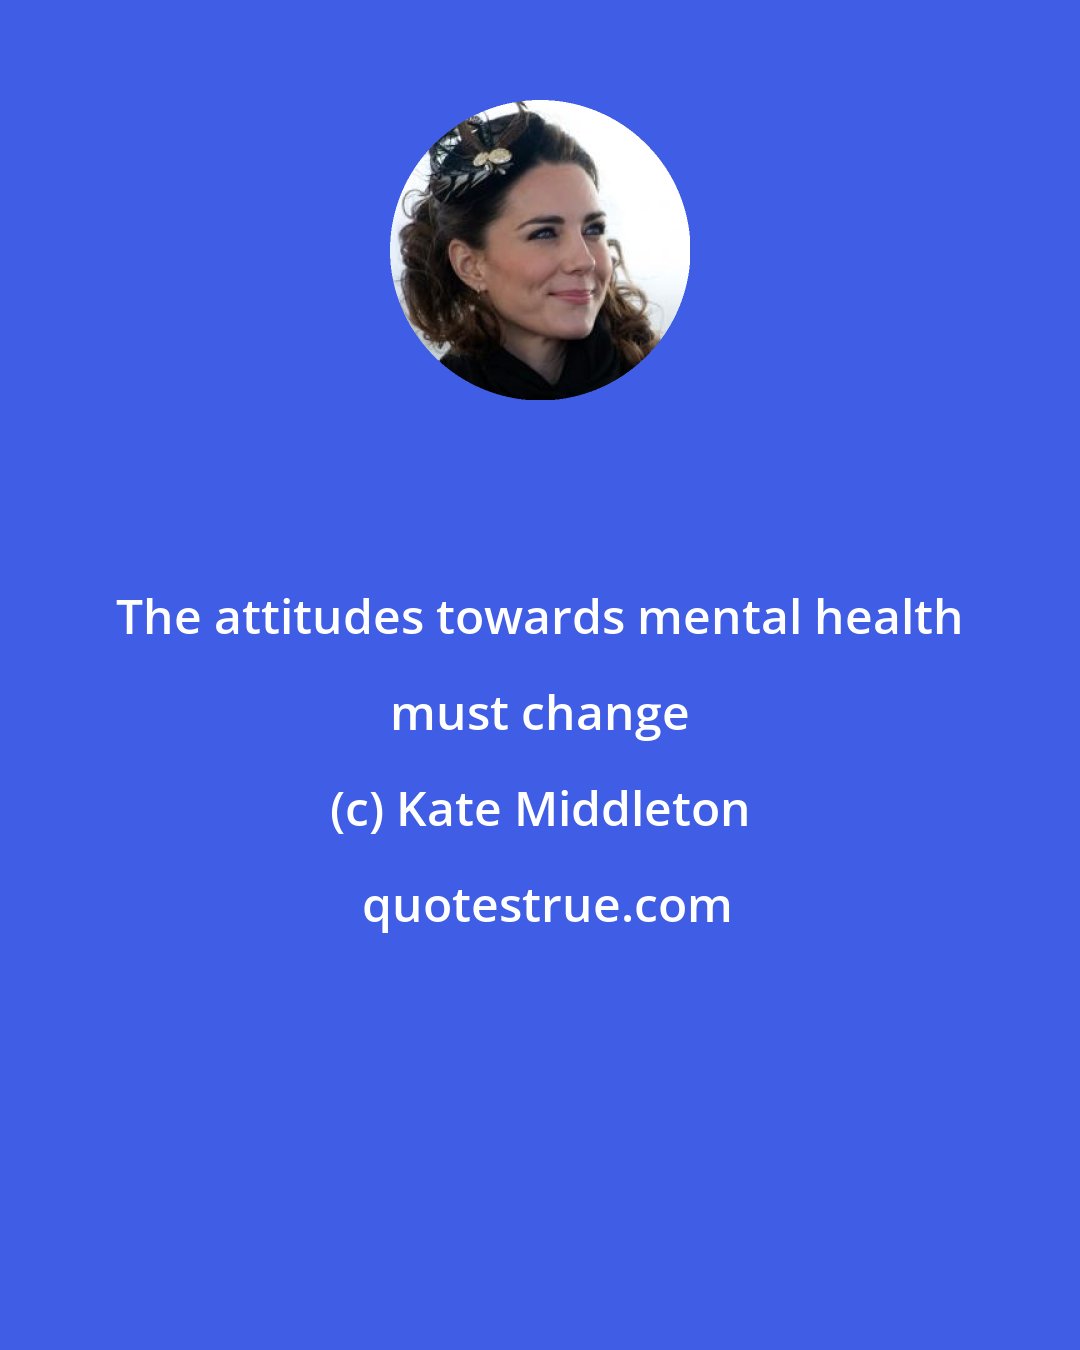 Kate Middleton: The attitudes towards mental health must change